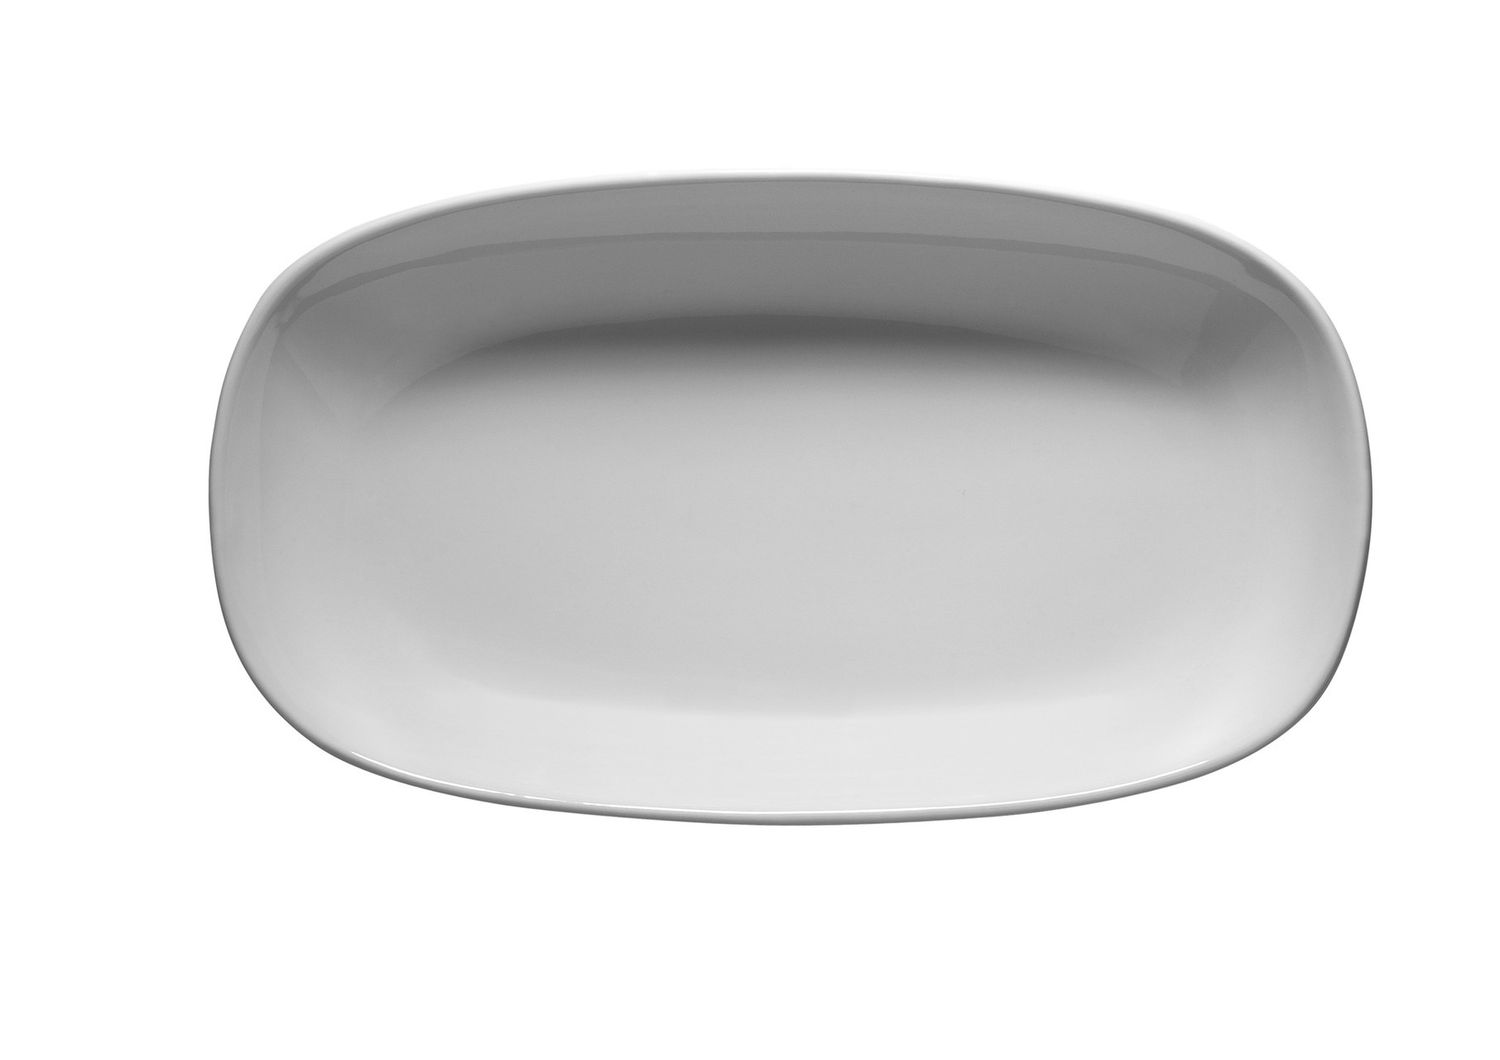 Kutahya Porselen - Tablett oval 24 x 13 cm Ent